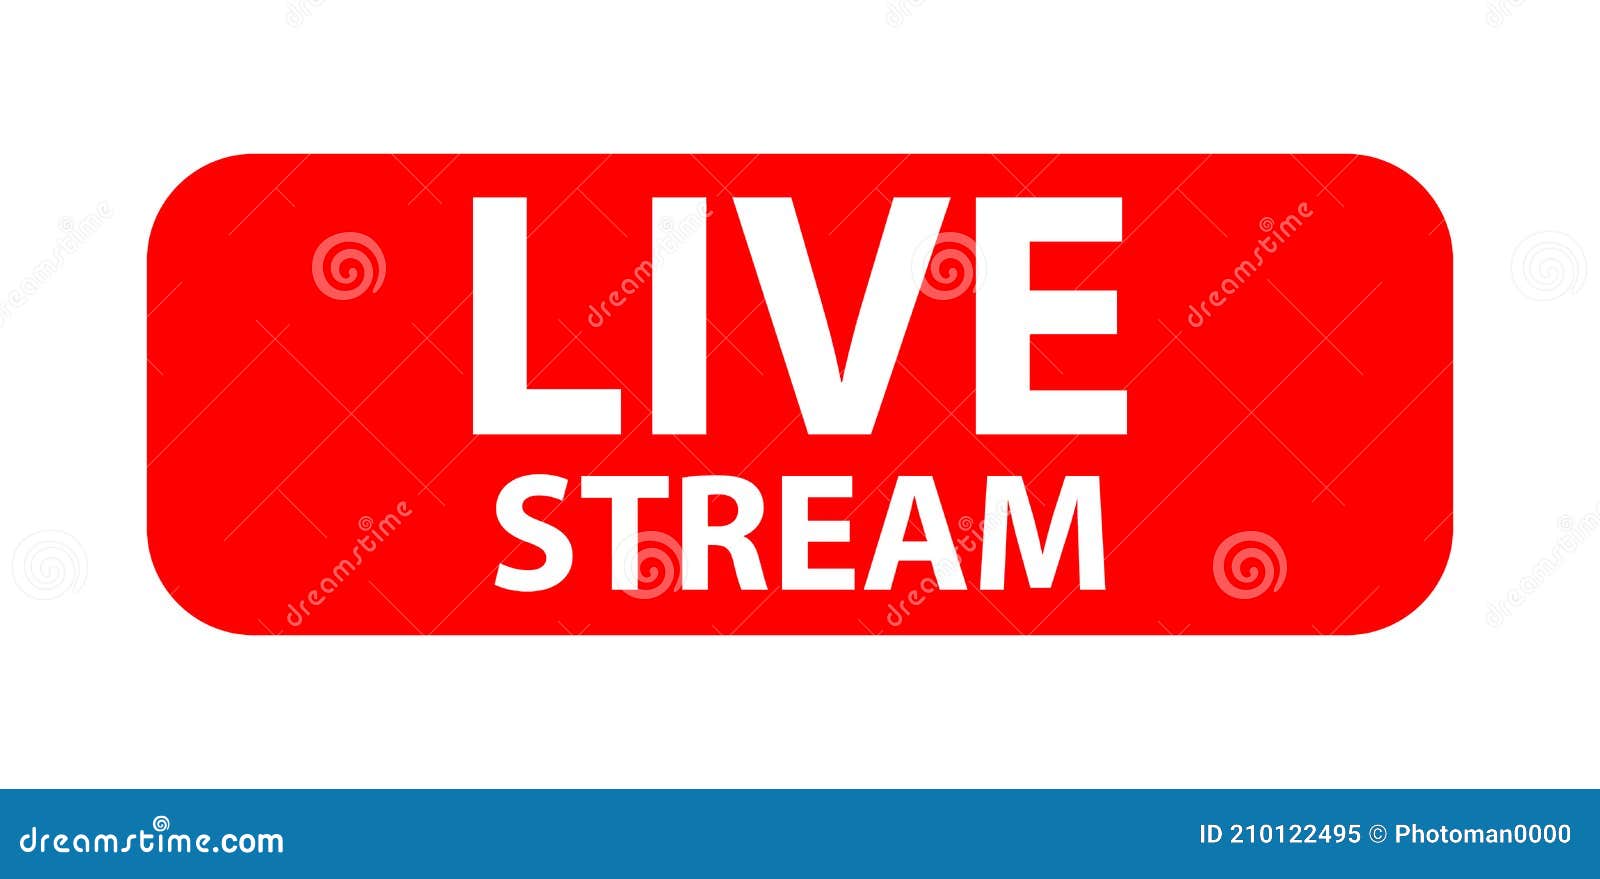 Live stream isolated logo stock vector. Illustration of news - 210122495